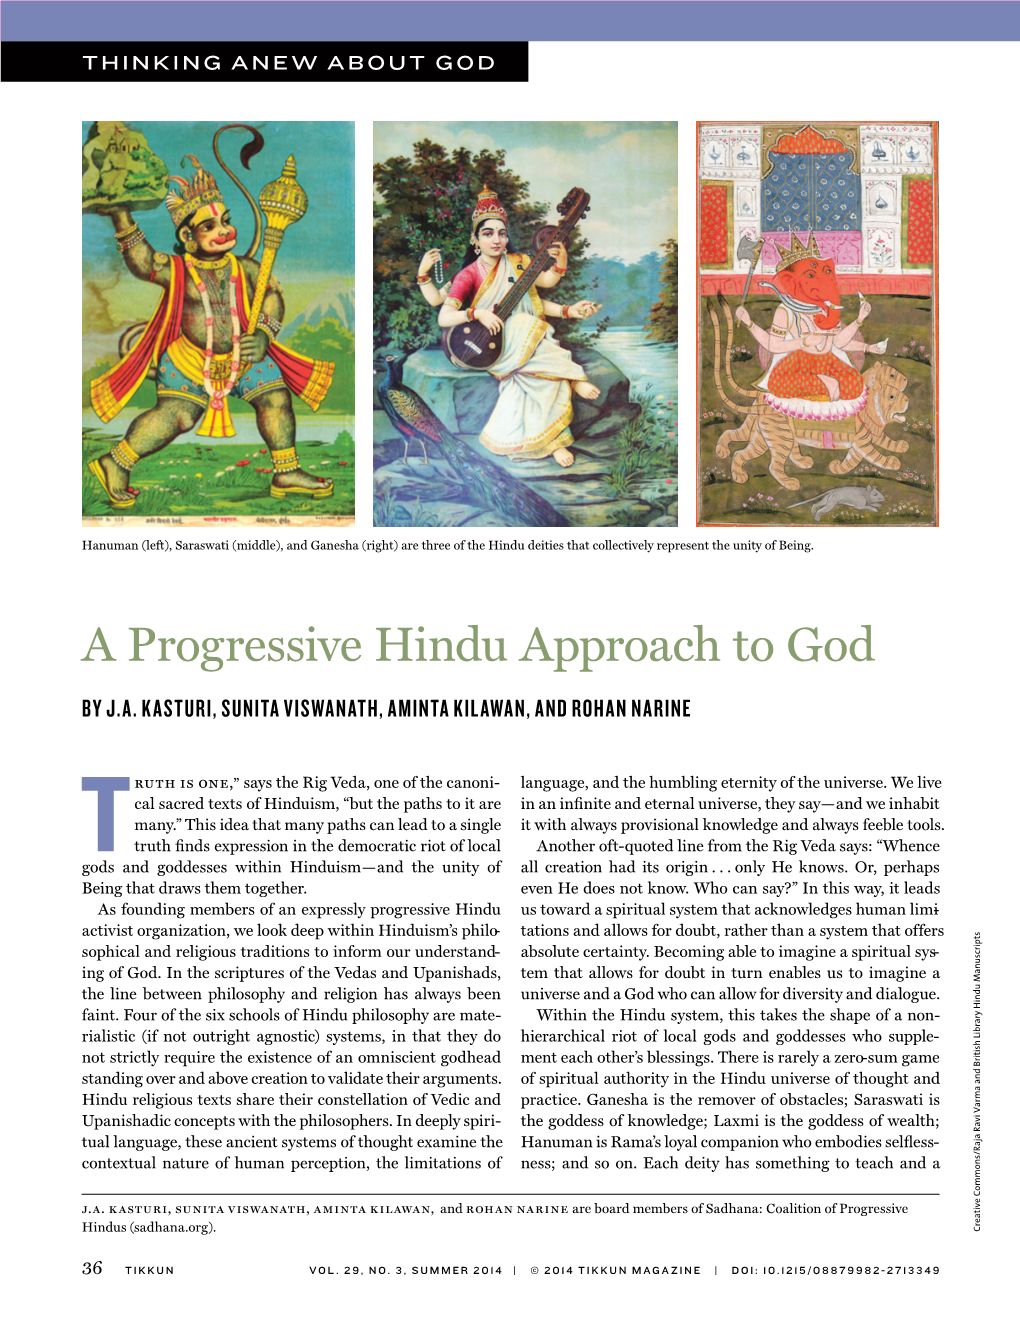 A Progressive Hindu Approach to God by J.A